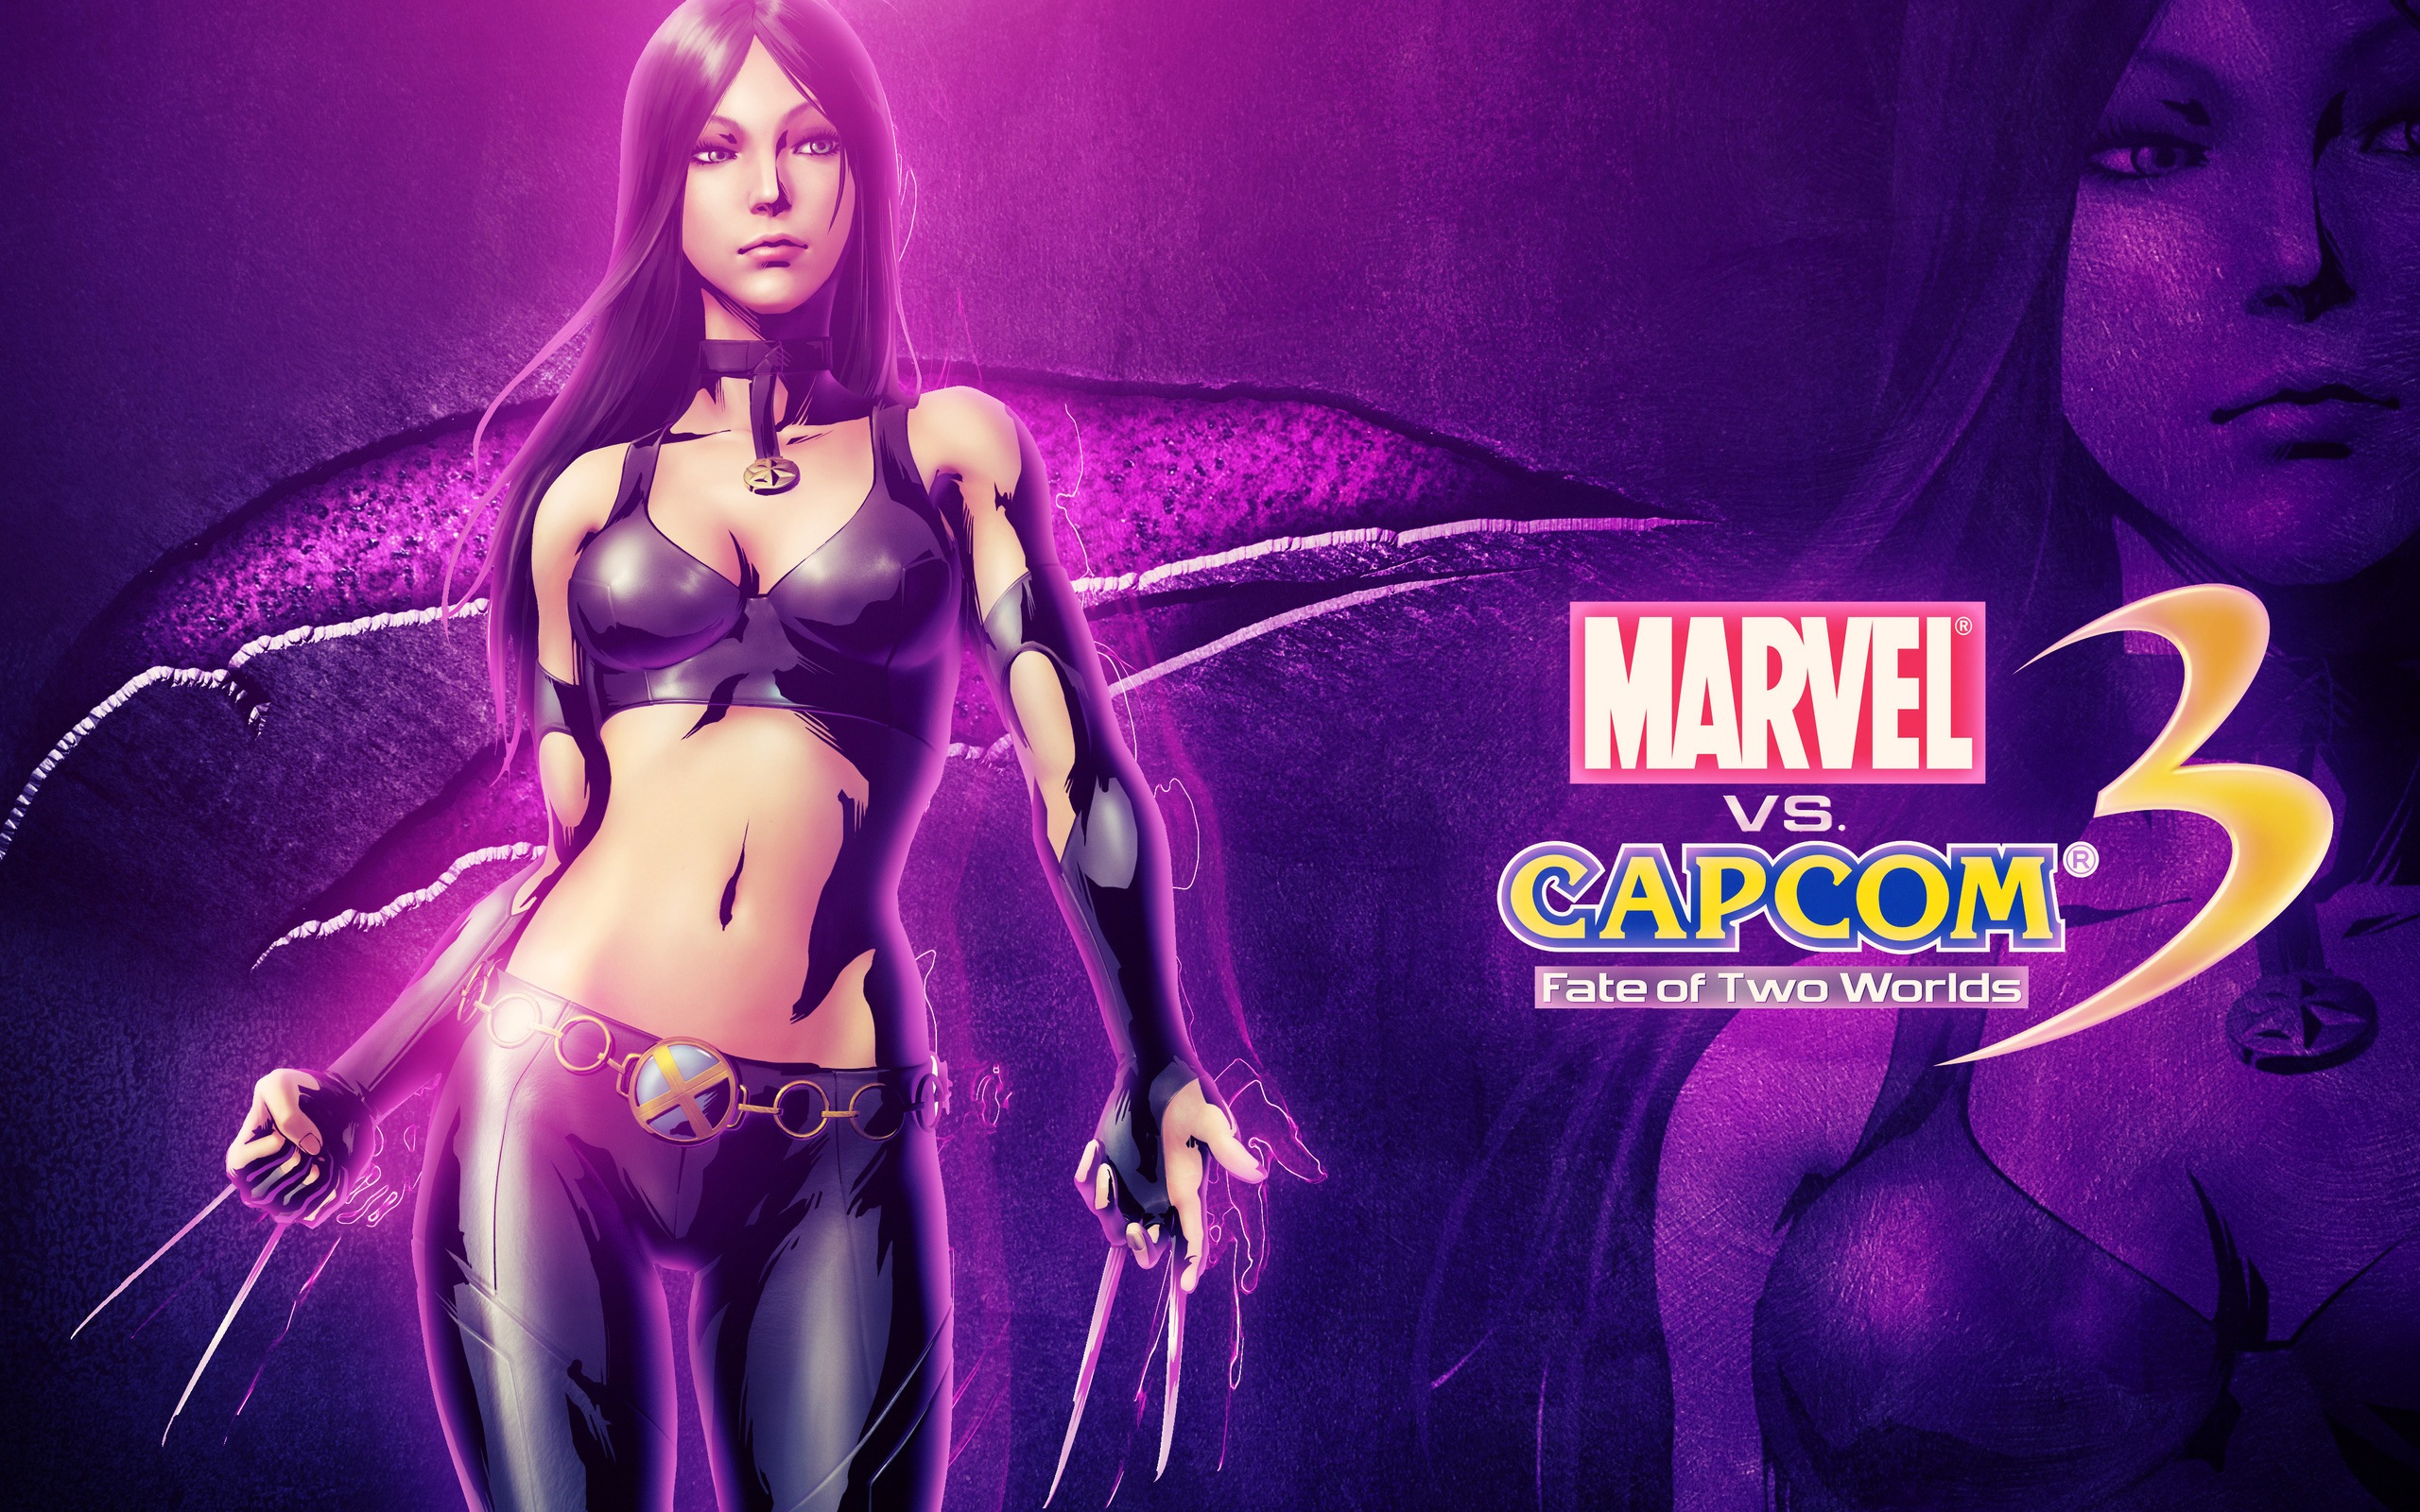 Marvel VS. Capcom 3: Fate of Two Worlds 漫画英雄VS.卡普空3 高清游戏壁纸10 - 2560x1600